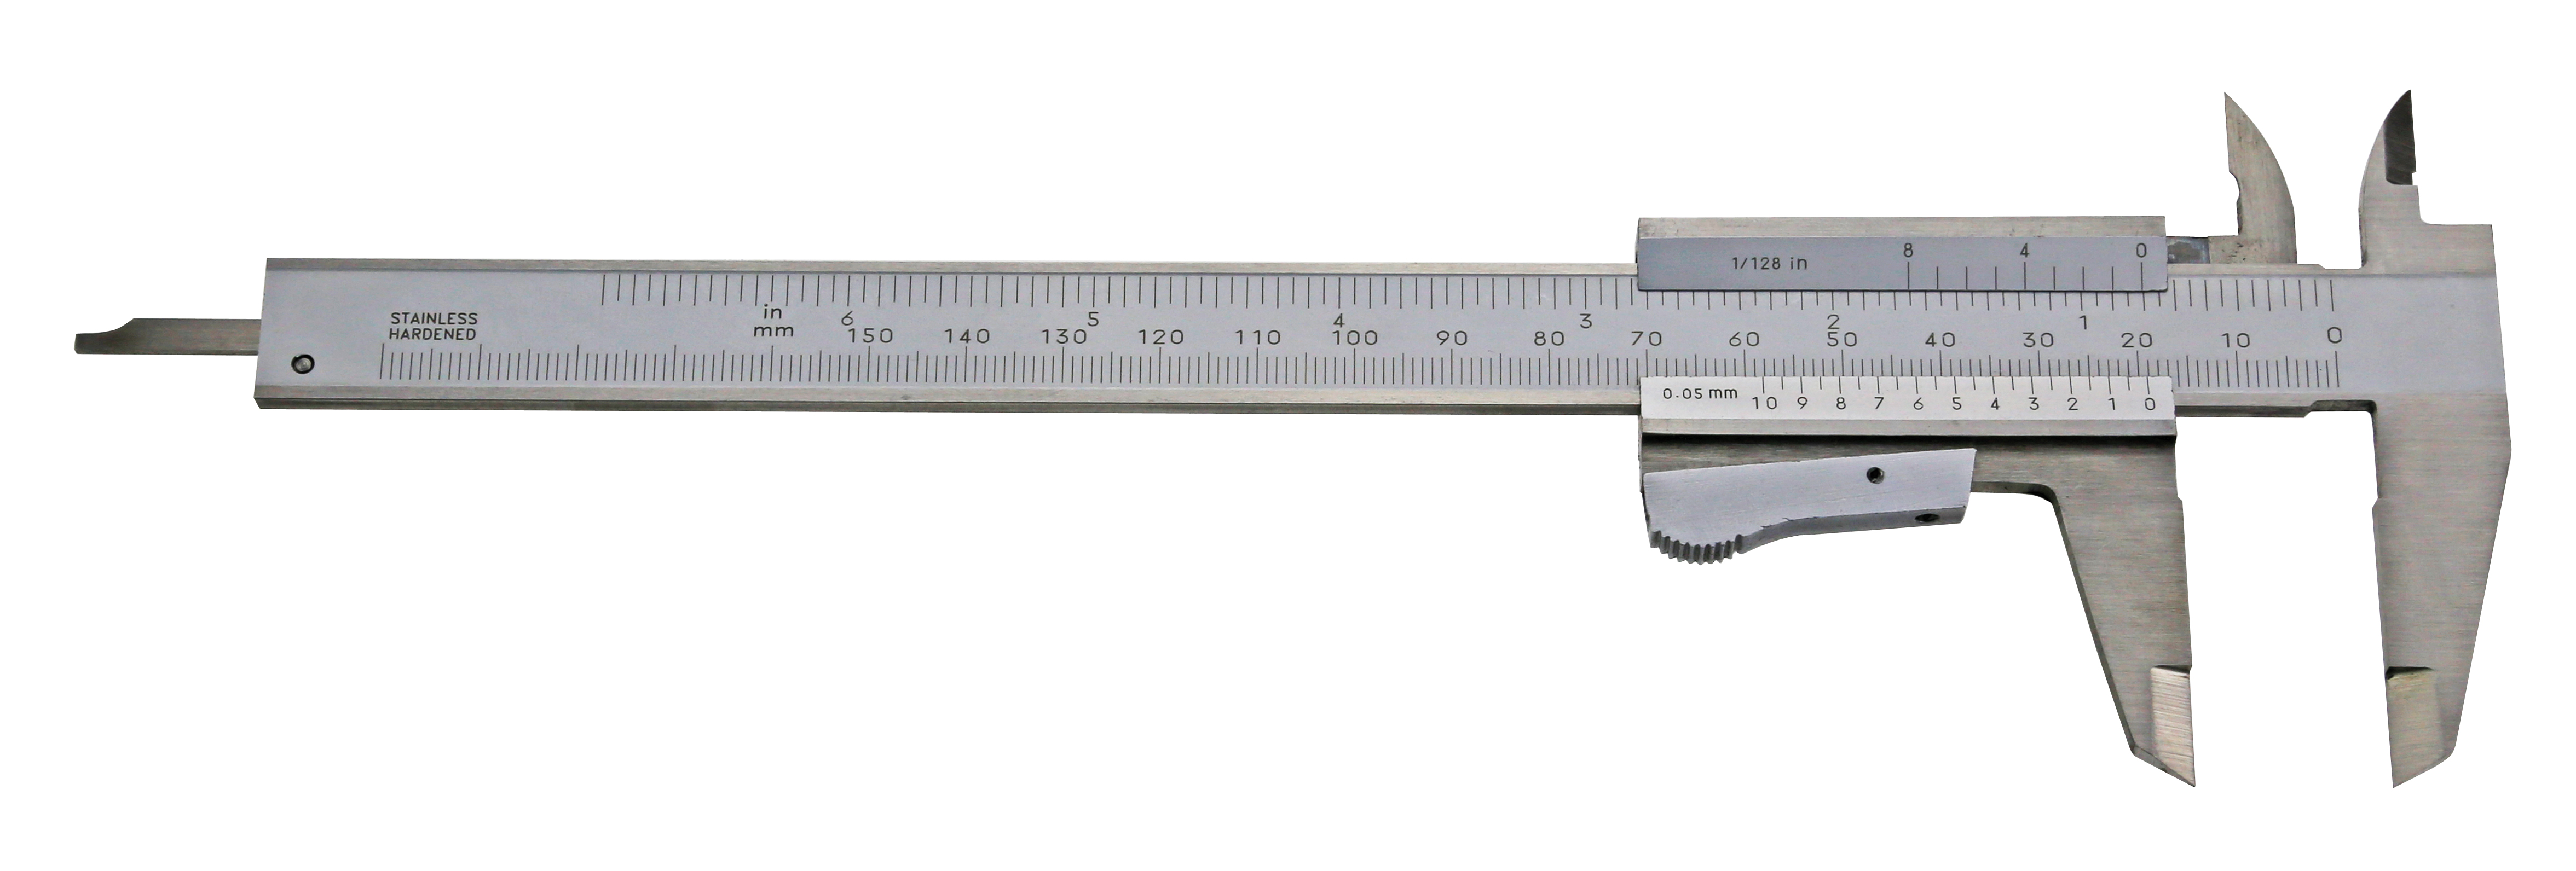 TiN-beschichtet Digital Messschieber 150 mm DIN 862 3V Metallgehäuse 